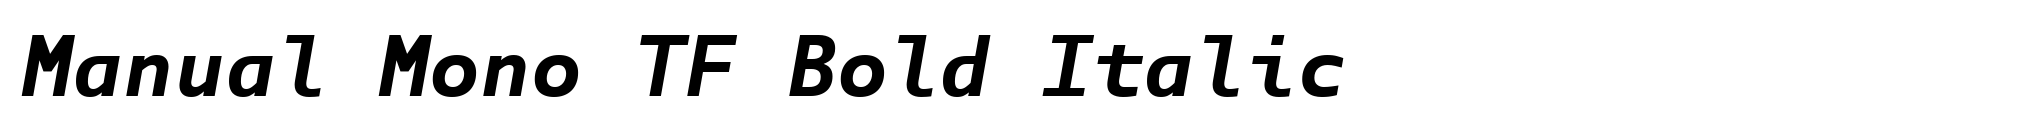 Manual Mono TF Bold Italic image